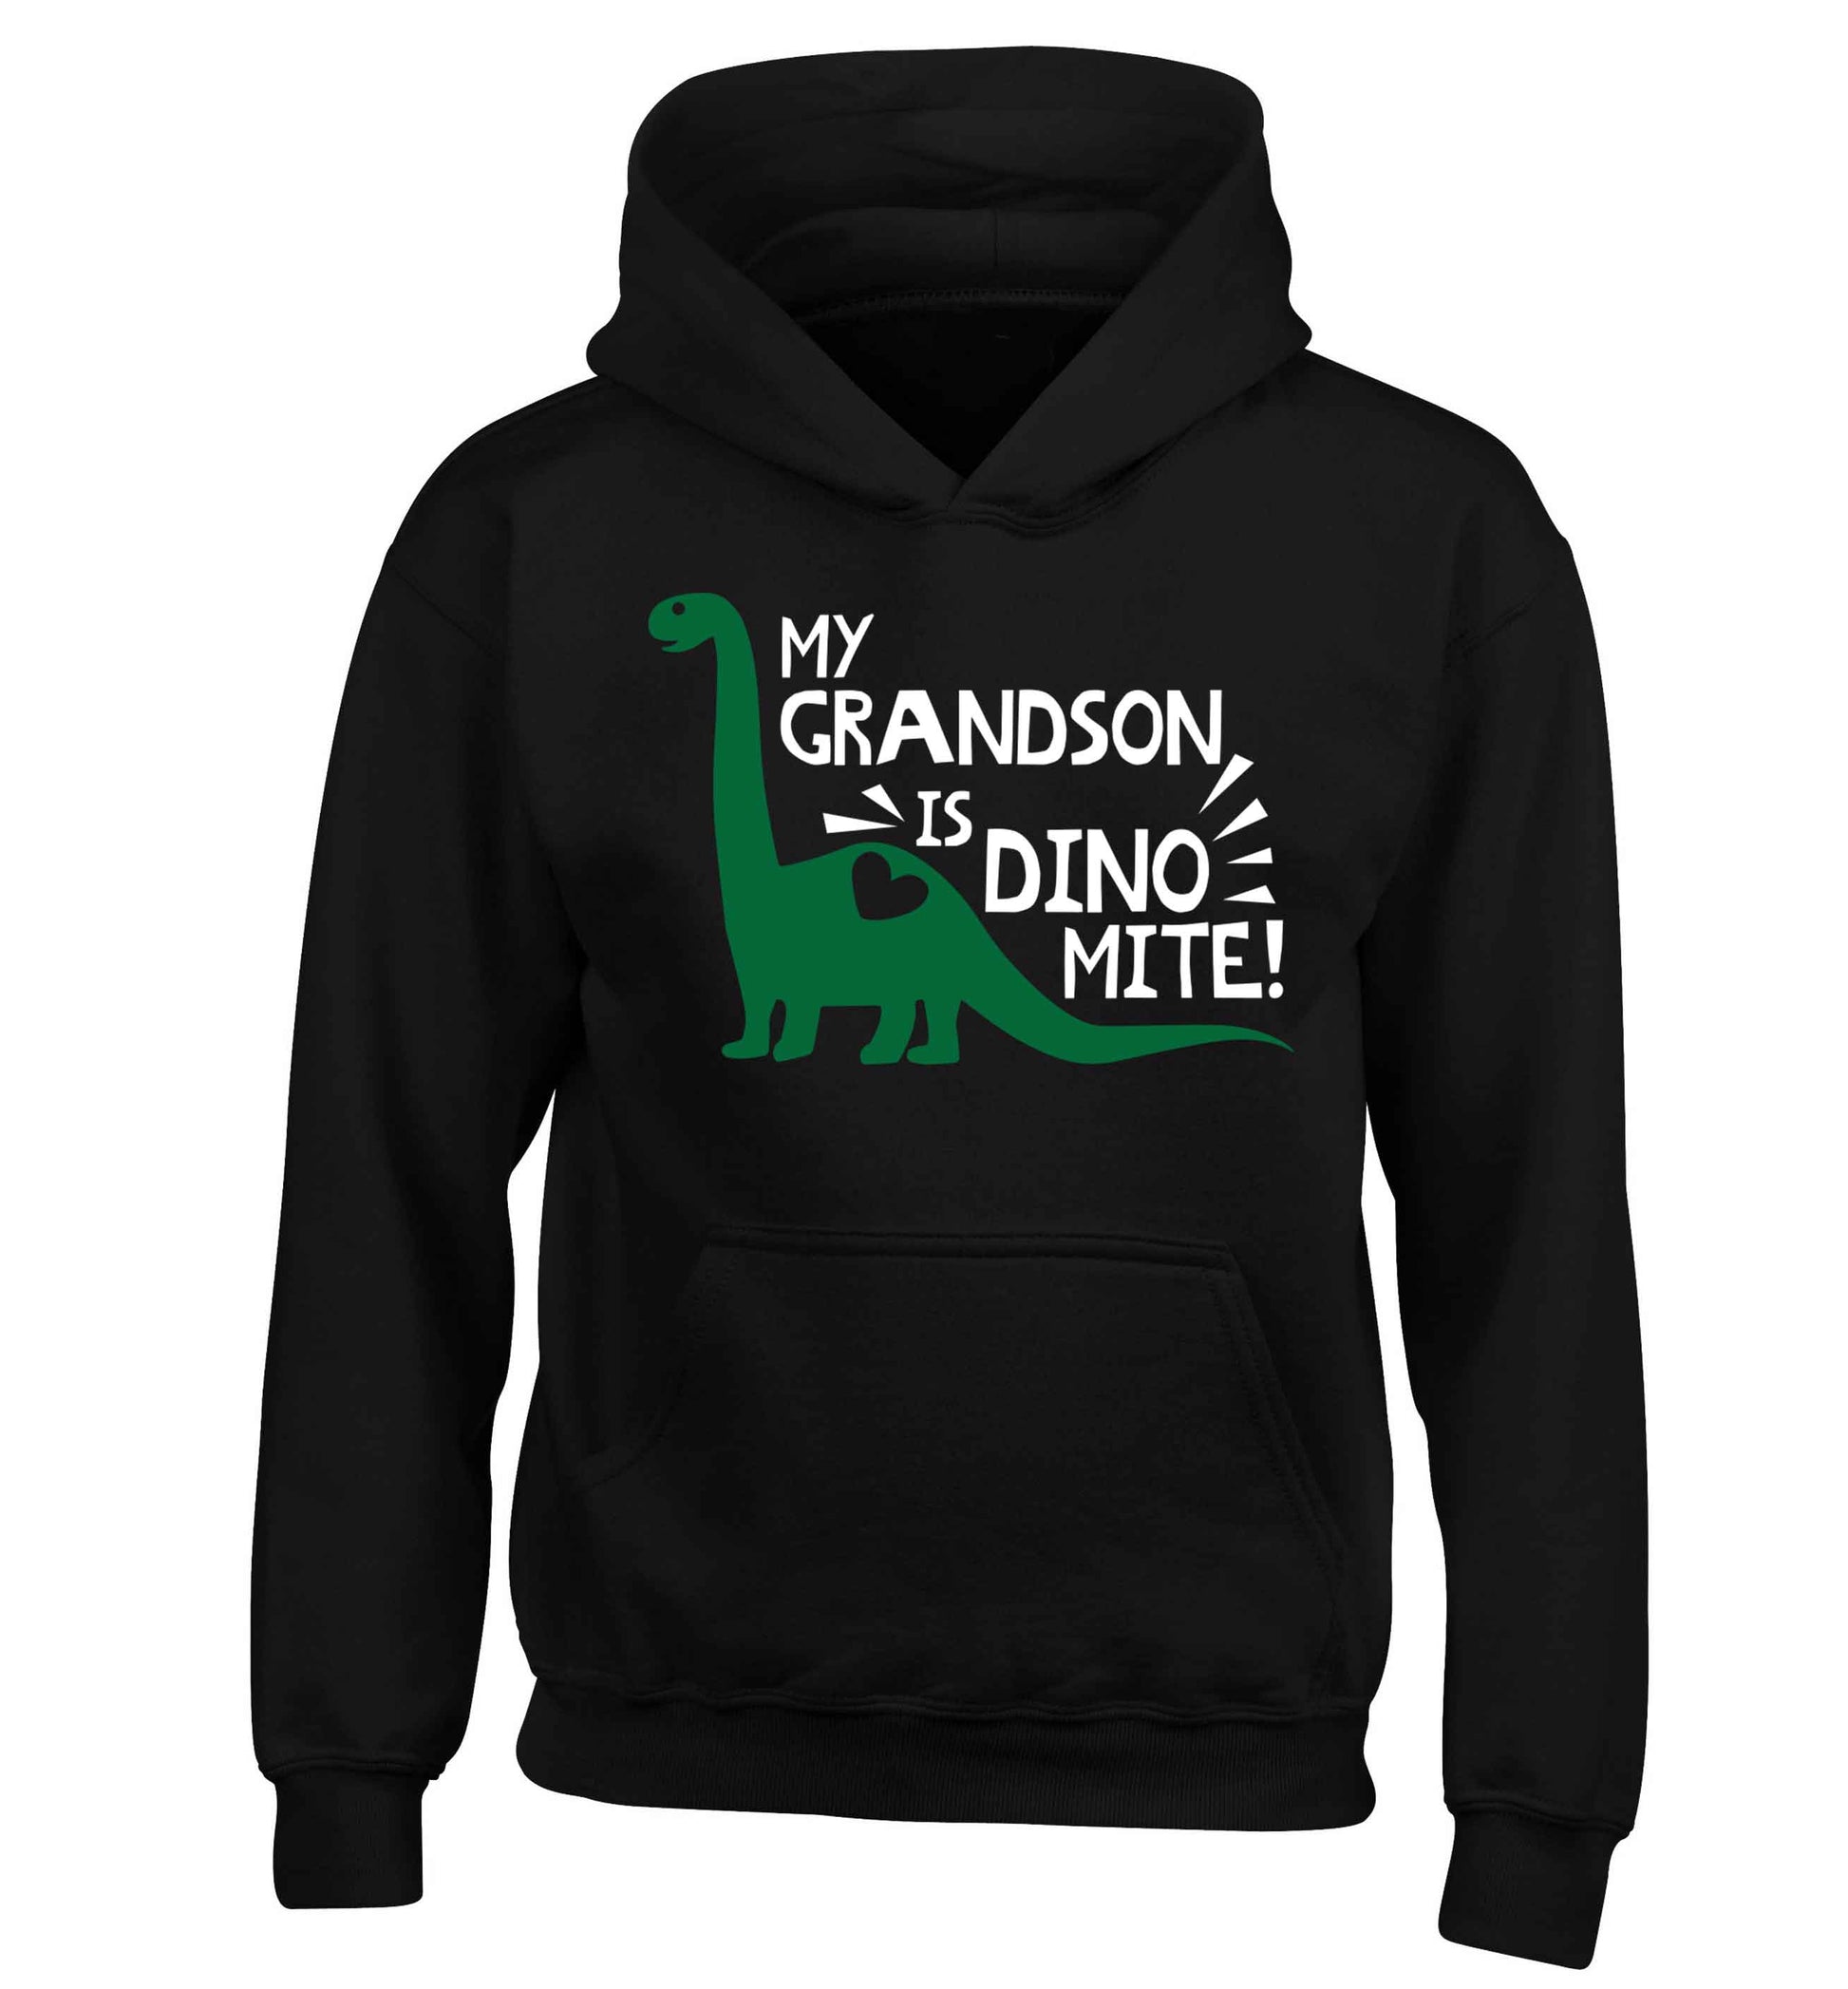 My grandson is dinomite! children's black hoodie 12-13 Years